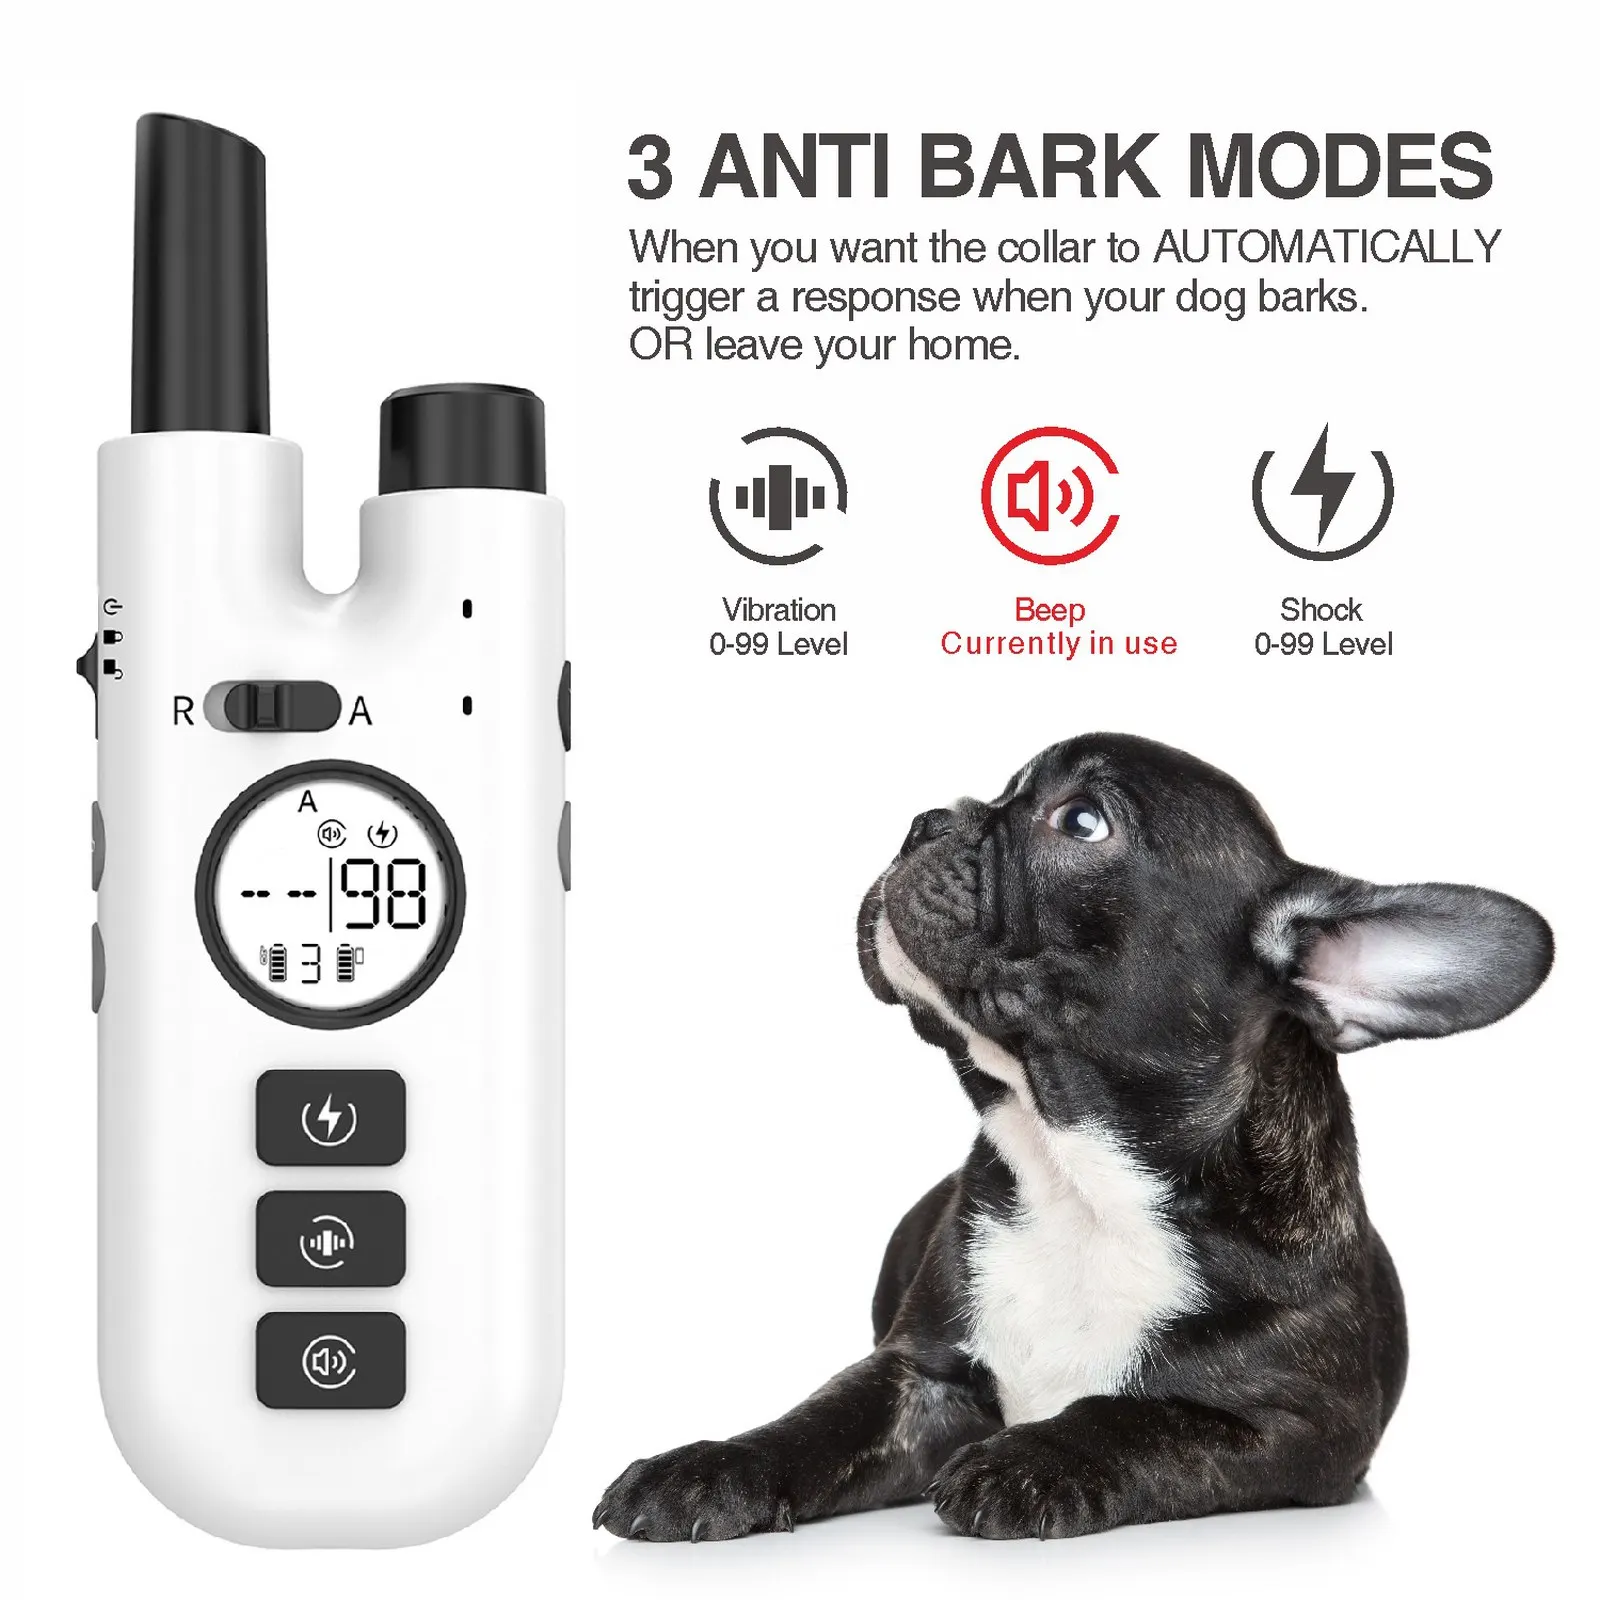 

800M Pet Dog Training Collar Intelligent Anti Bark Remote Control Trainer Waterproof LCD Screen with Vibration Beep Shock Collar